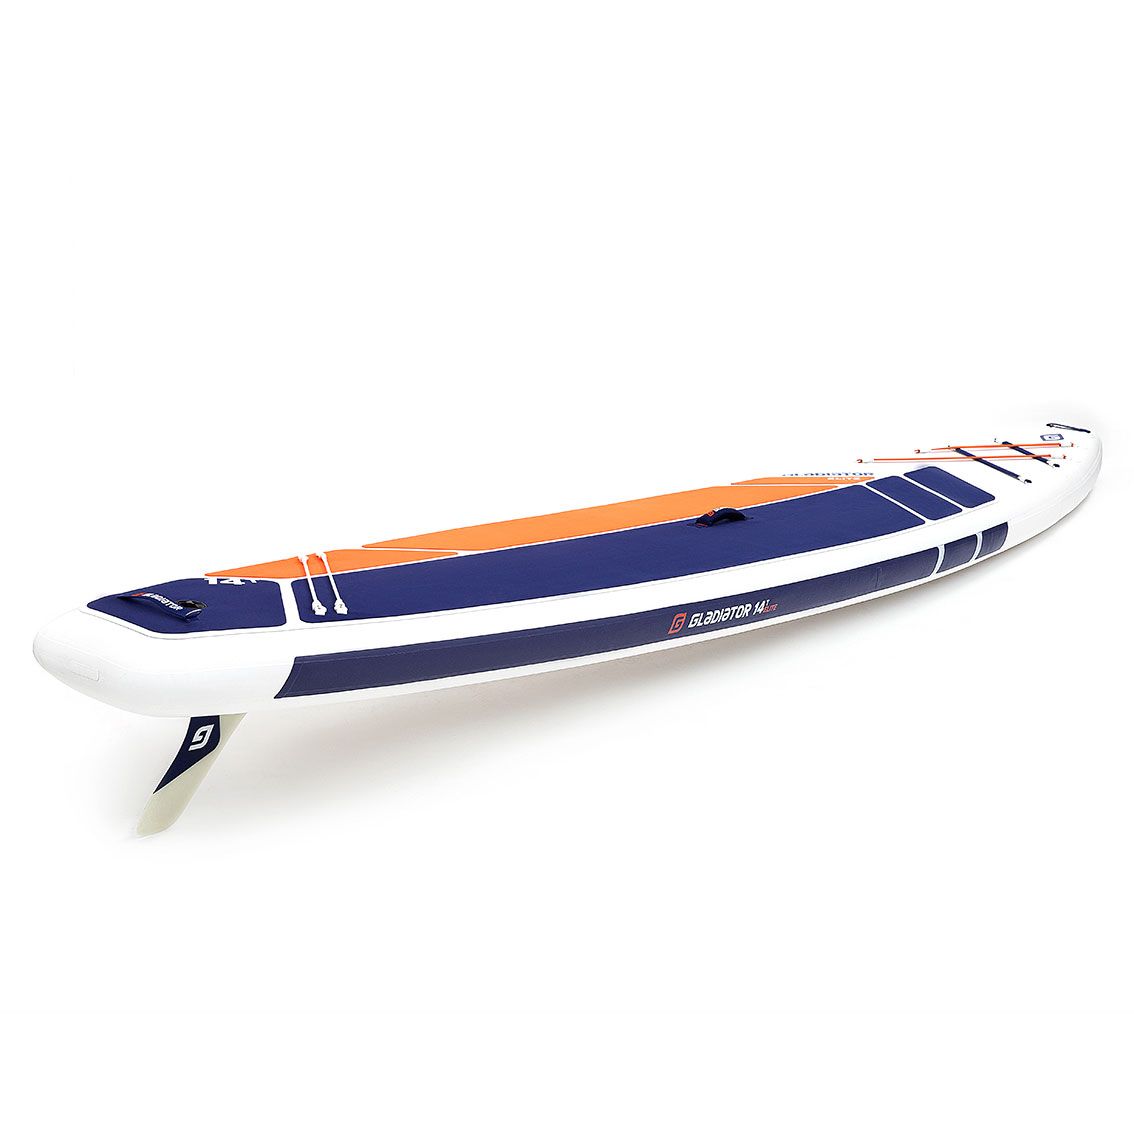 Gladiator Elite 14'0" x 30" x 6" Touring Inflatable Paddleboard